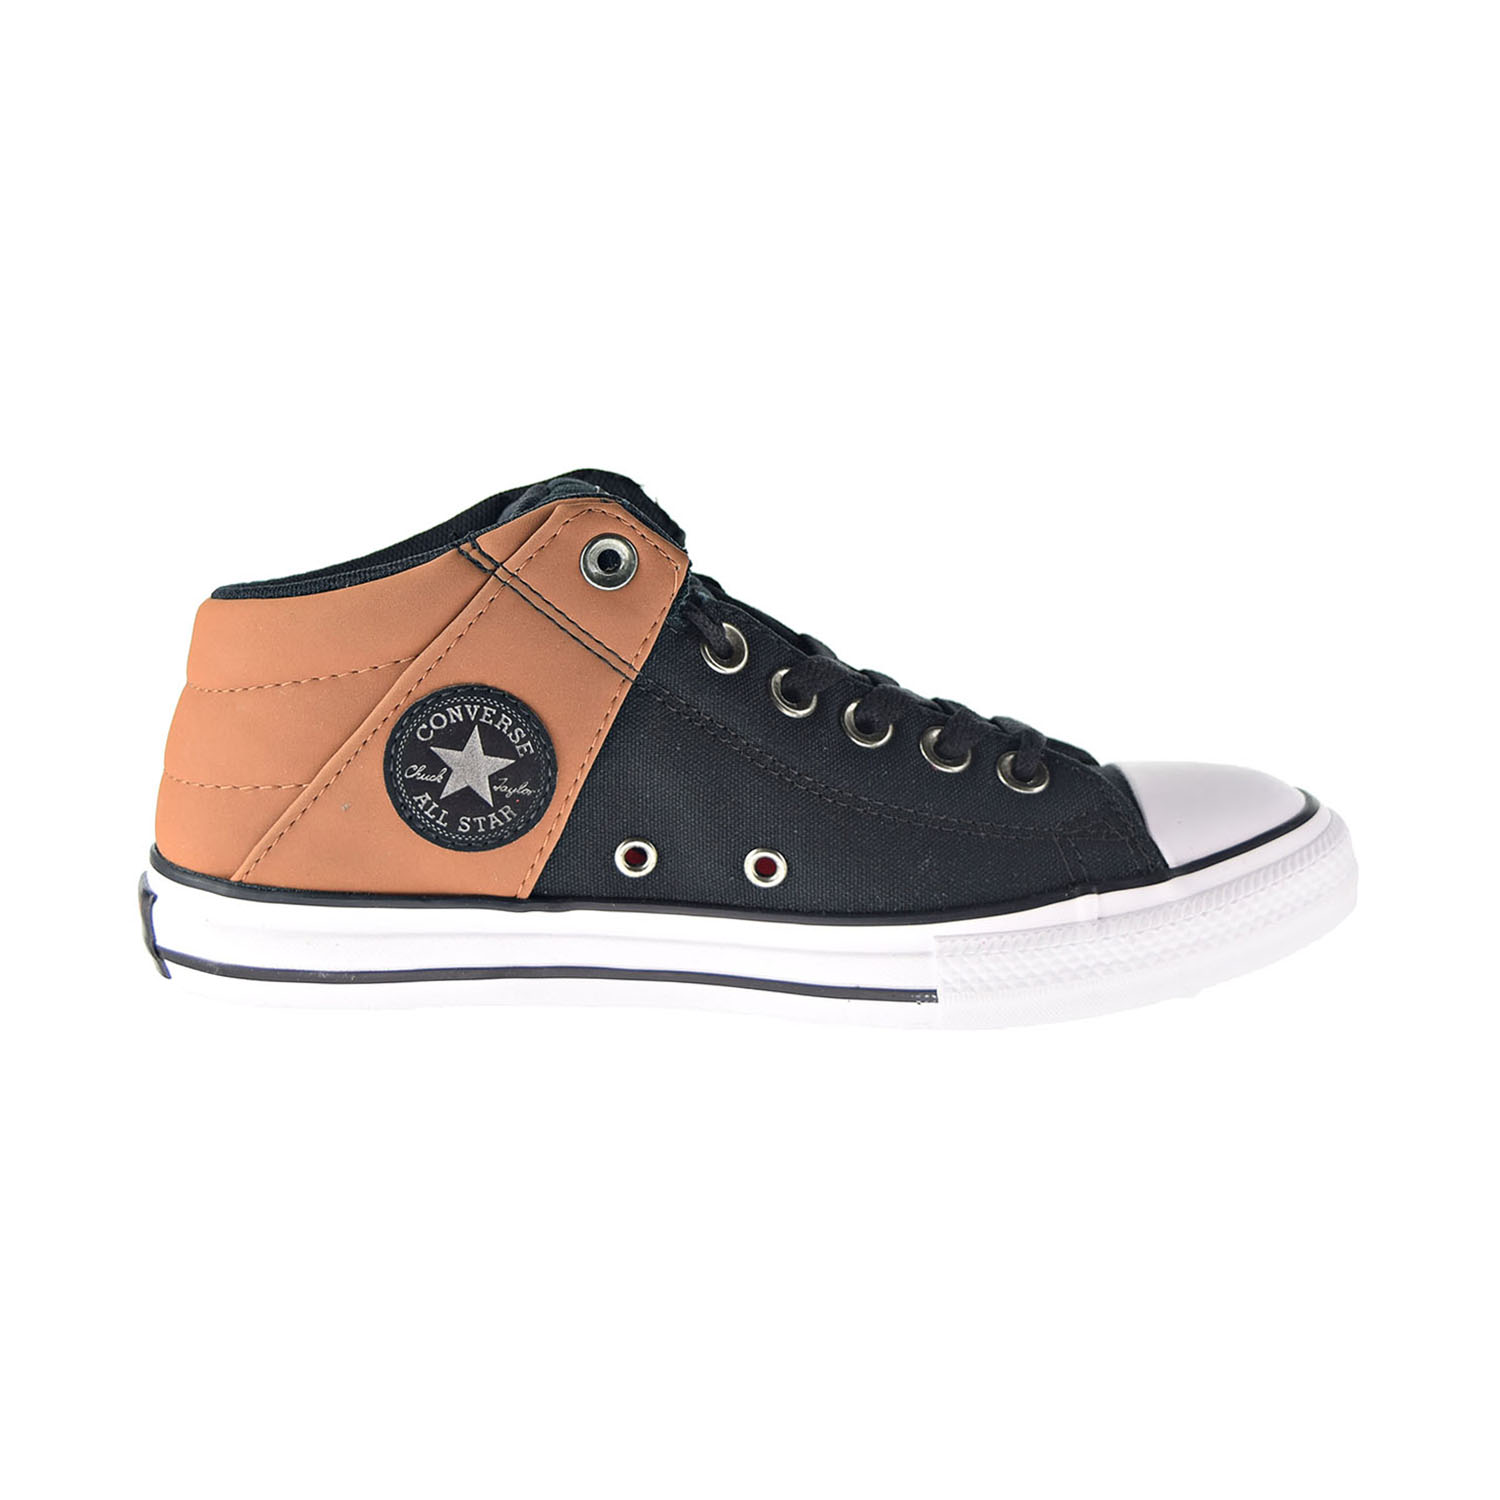 Converse Chuck Taylor All Star Axel Mid Kids' Shoes Black-Warm Tan-White 666065f (10.5 M US)